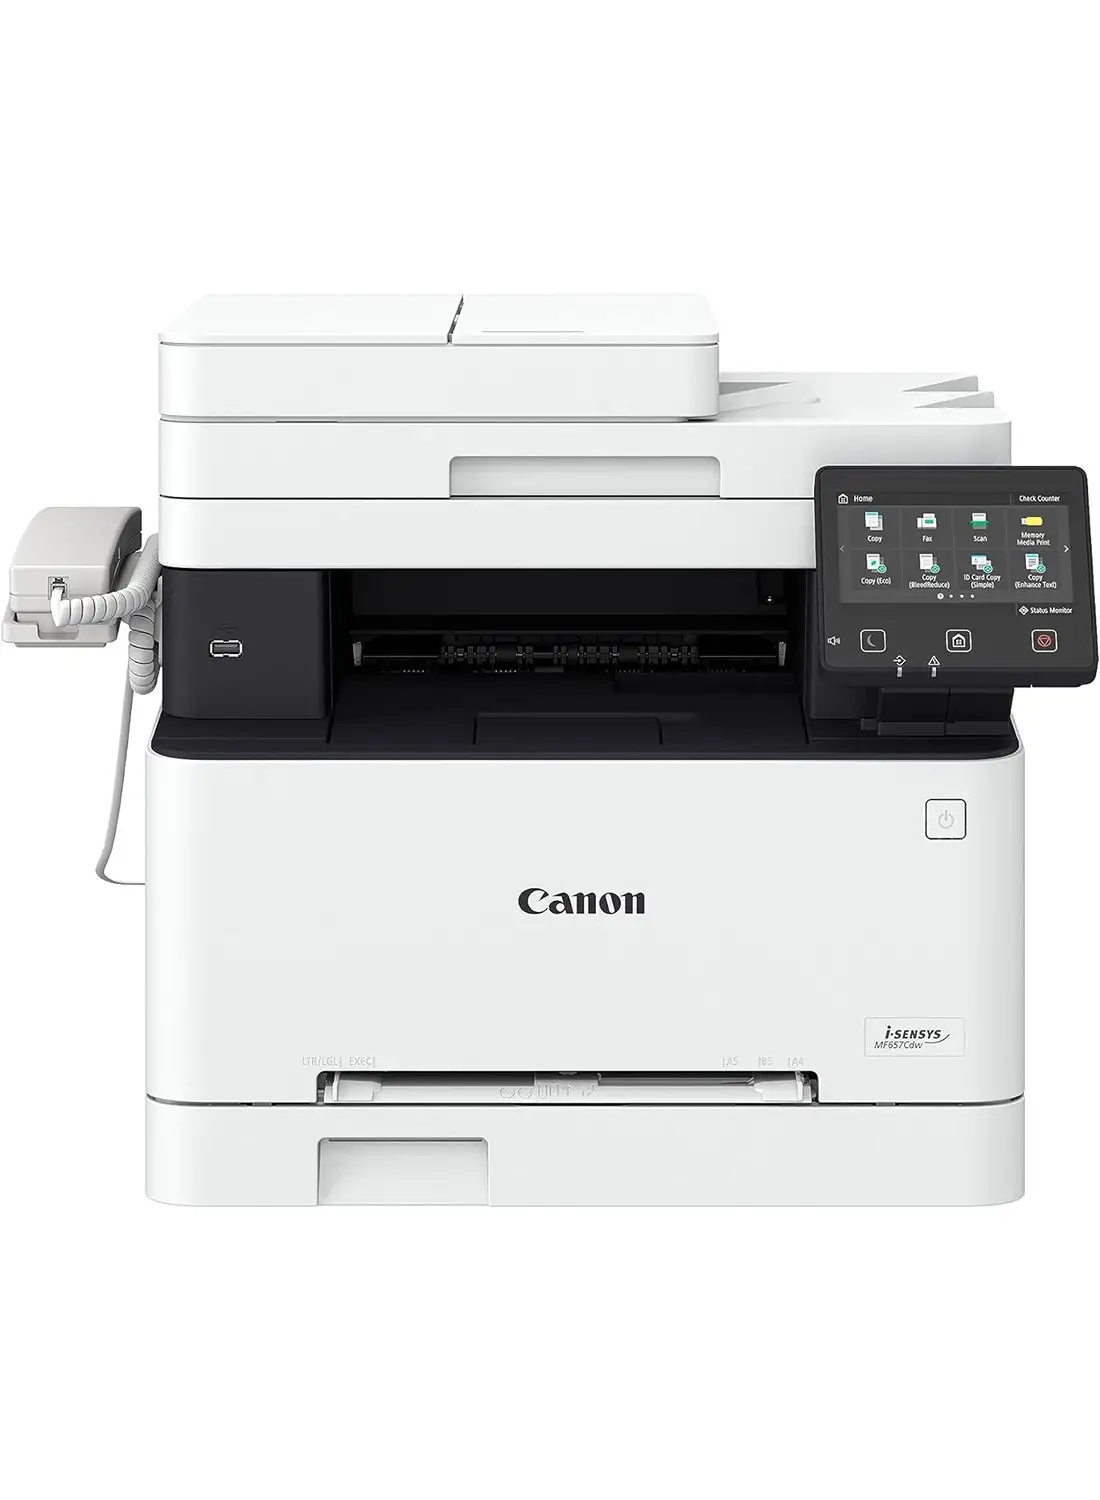 Canon i-SENSYS MF657Cdw 4-in-1 (Print, Copy, Scan, Fax) Multifunction Colour Wi-Fi Printer White/Black